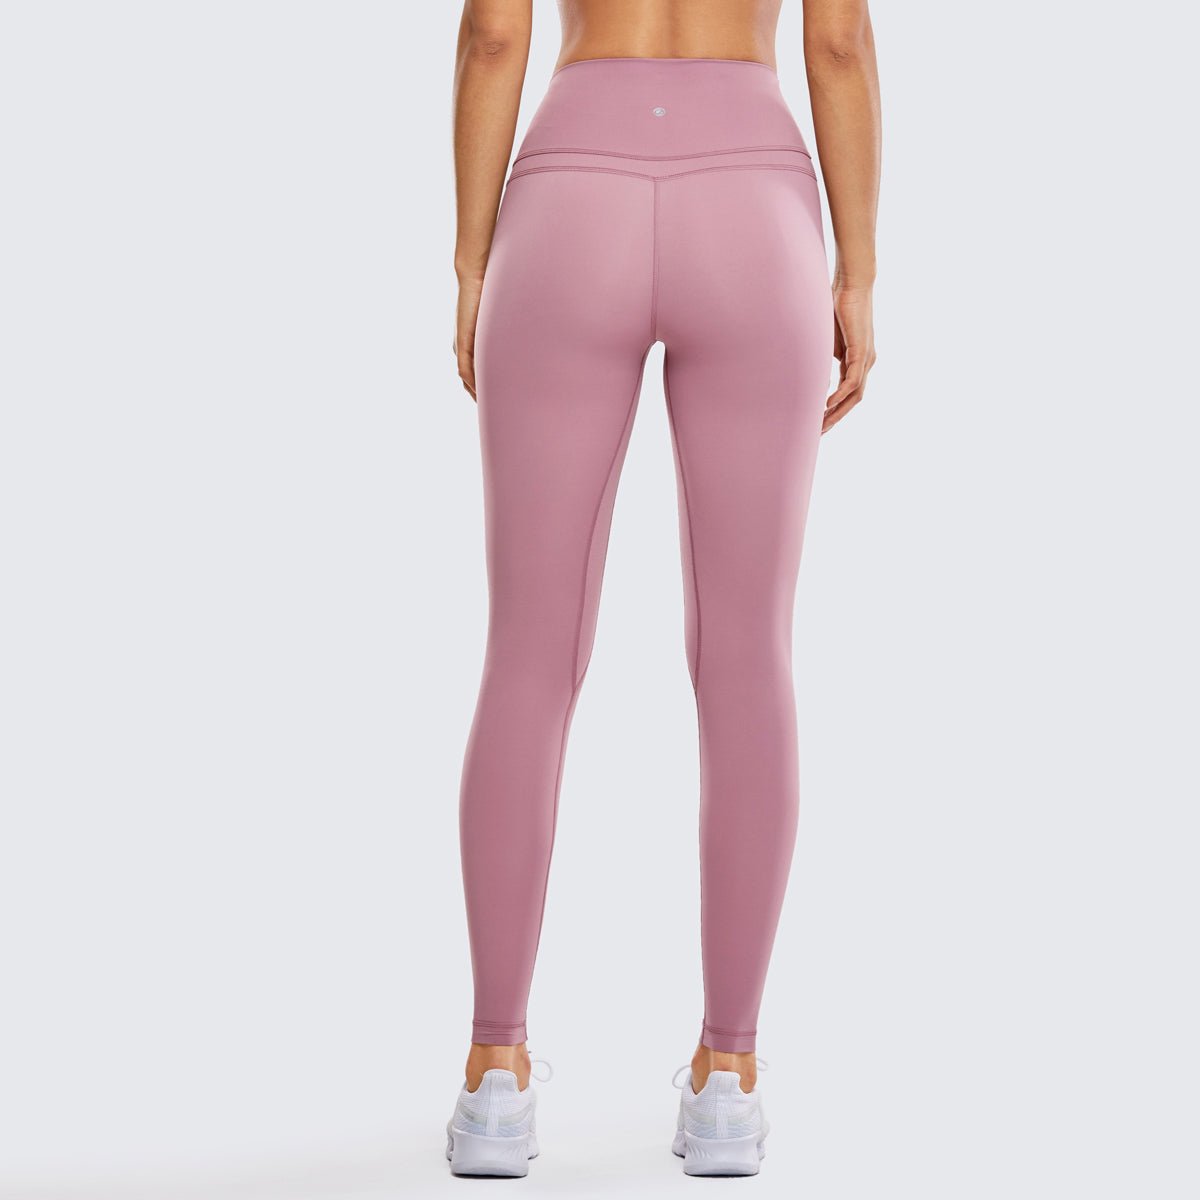 High Rise Seamless Pink Full Length Workout Leggings - 0cm